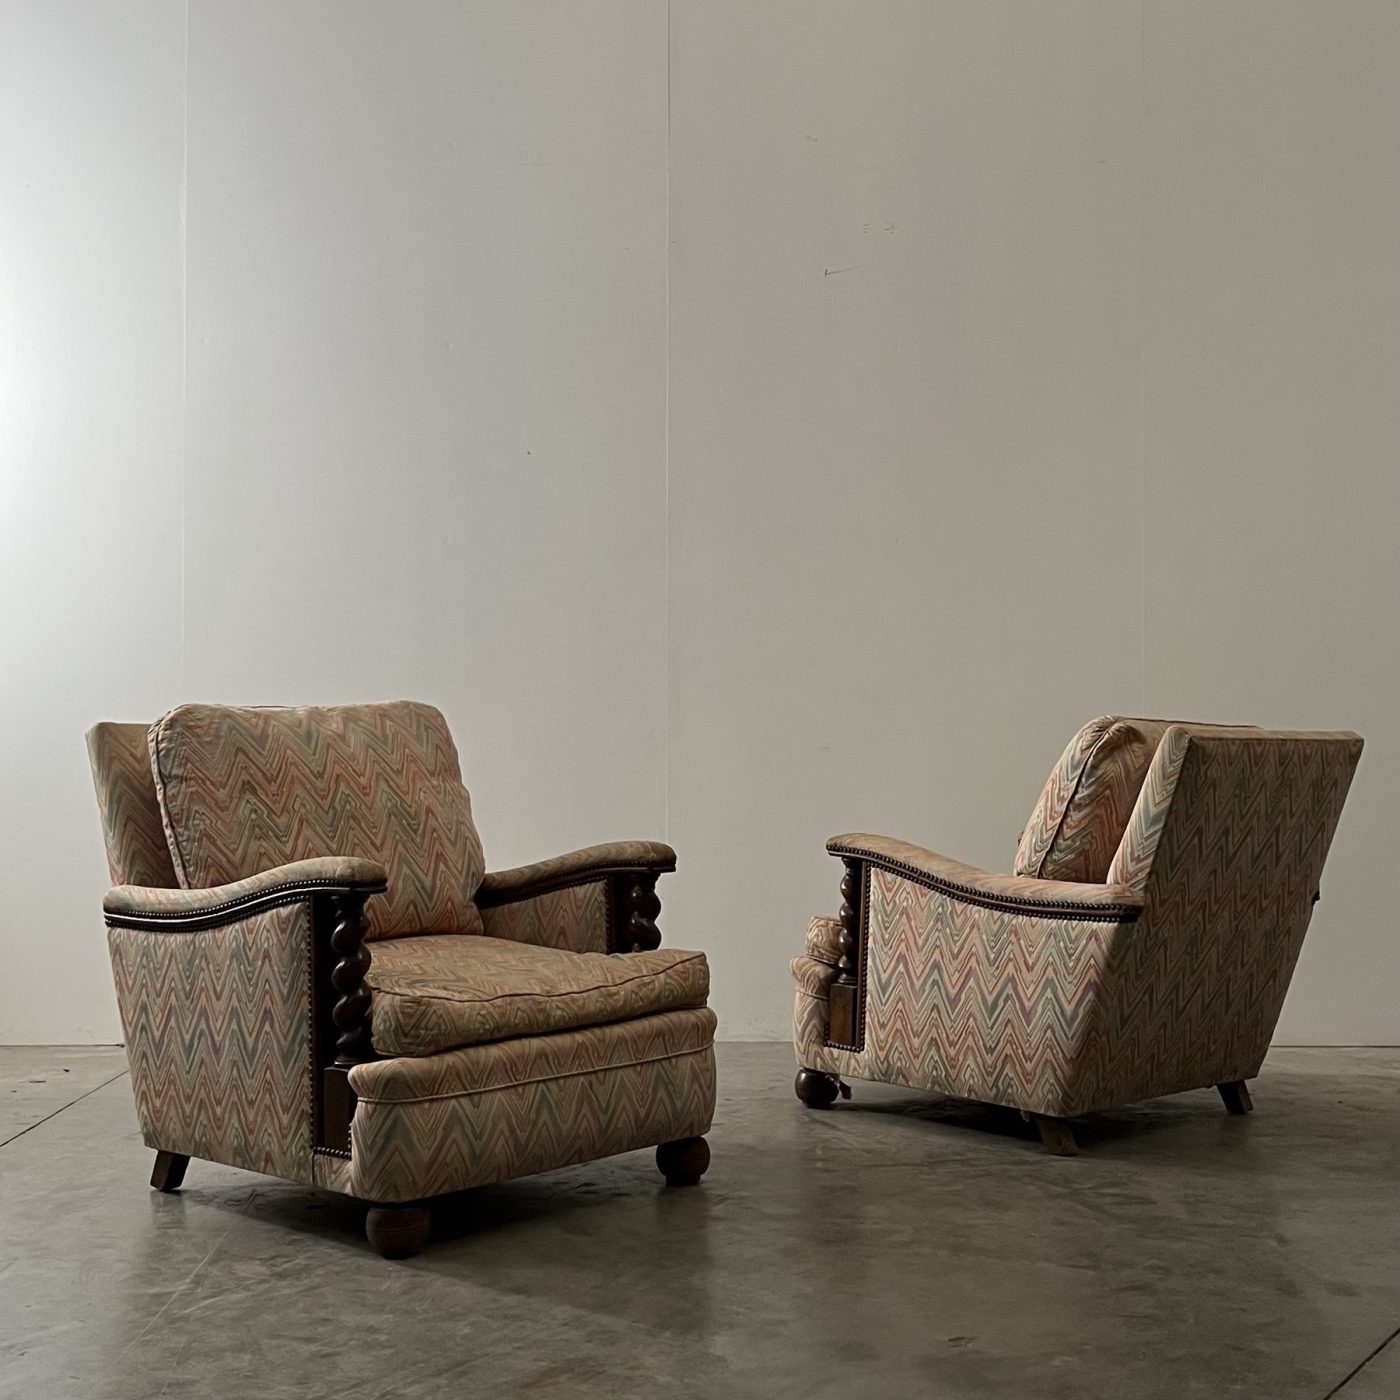 objet-vagabond-armchairs0003